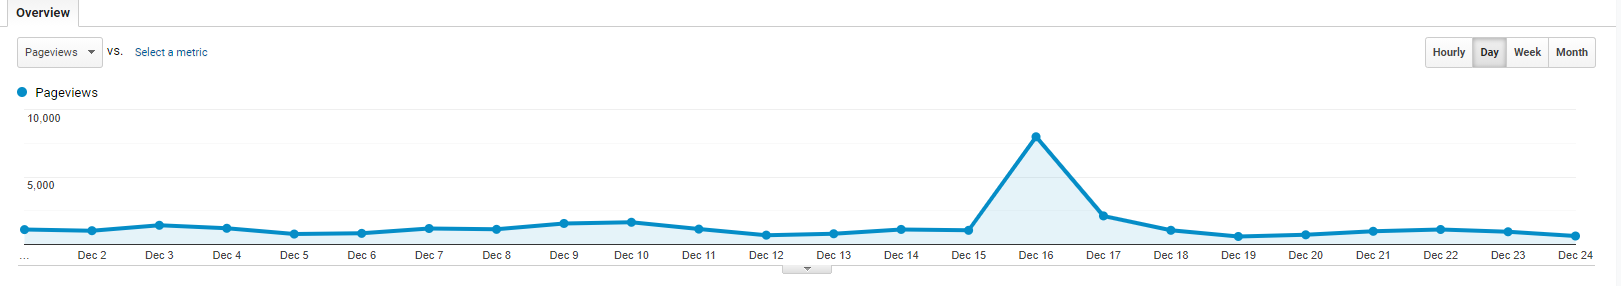 Google Analytics spike in traffice on December 16th.